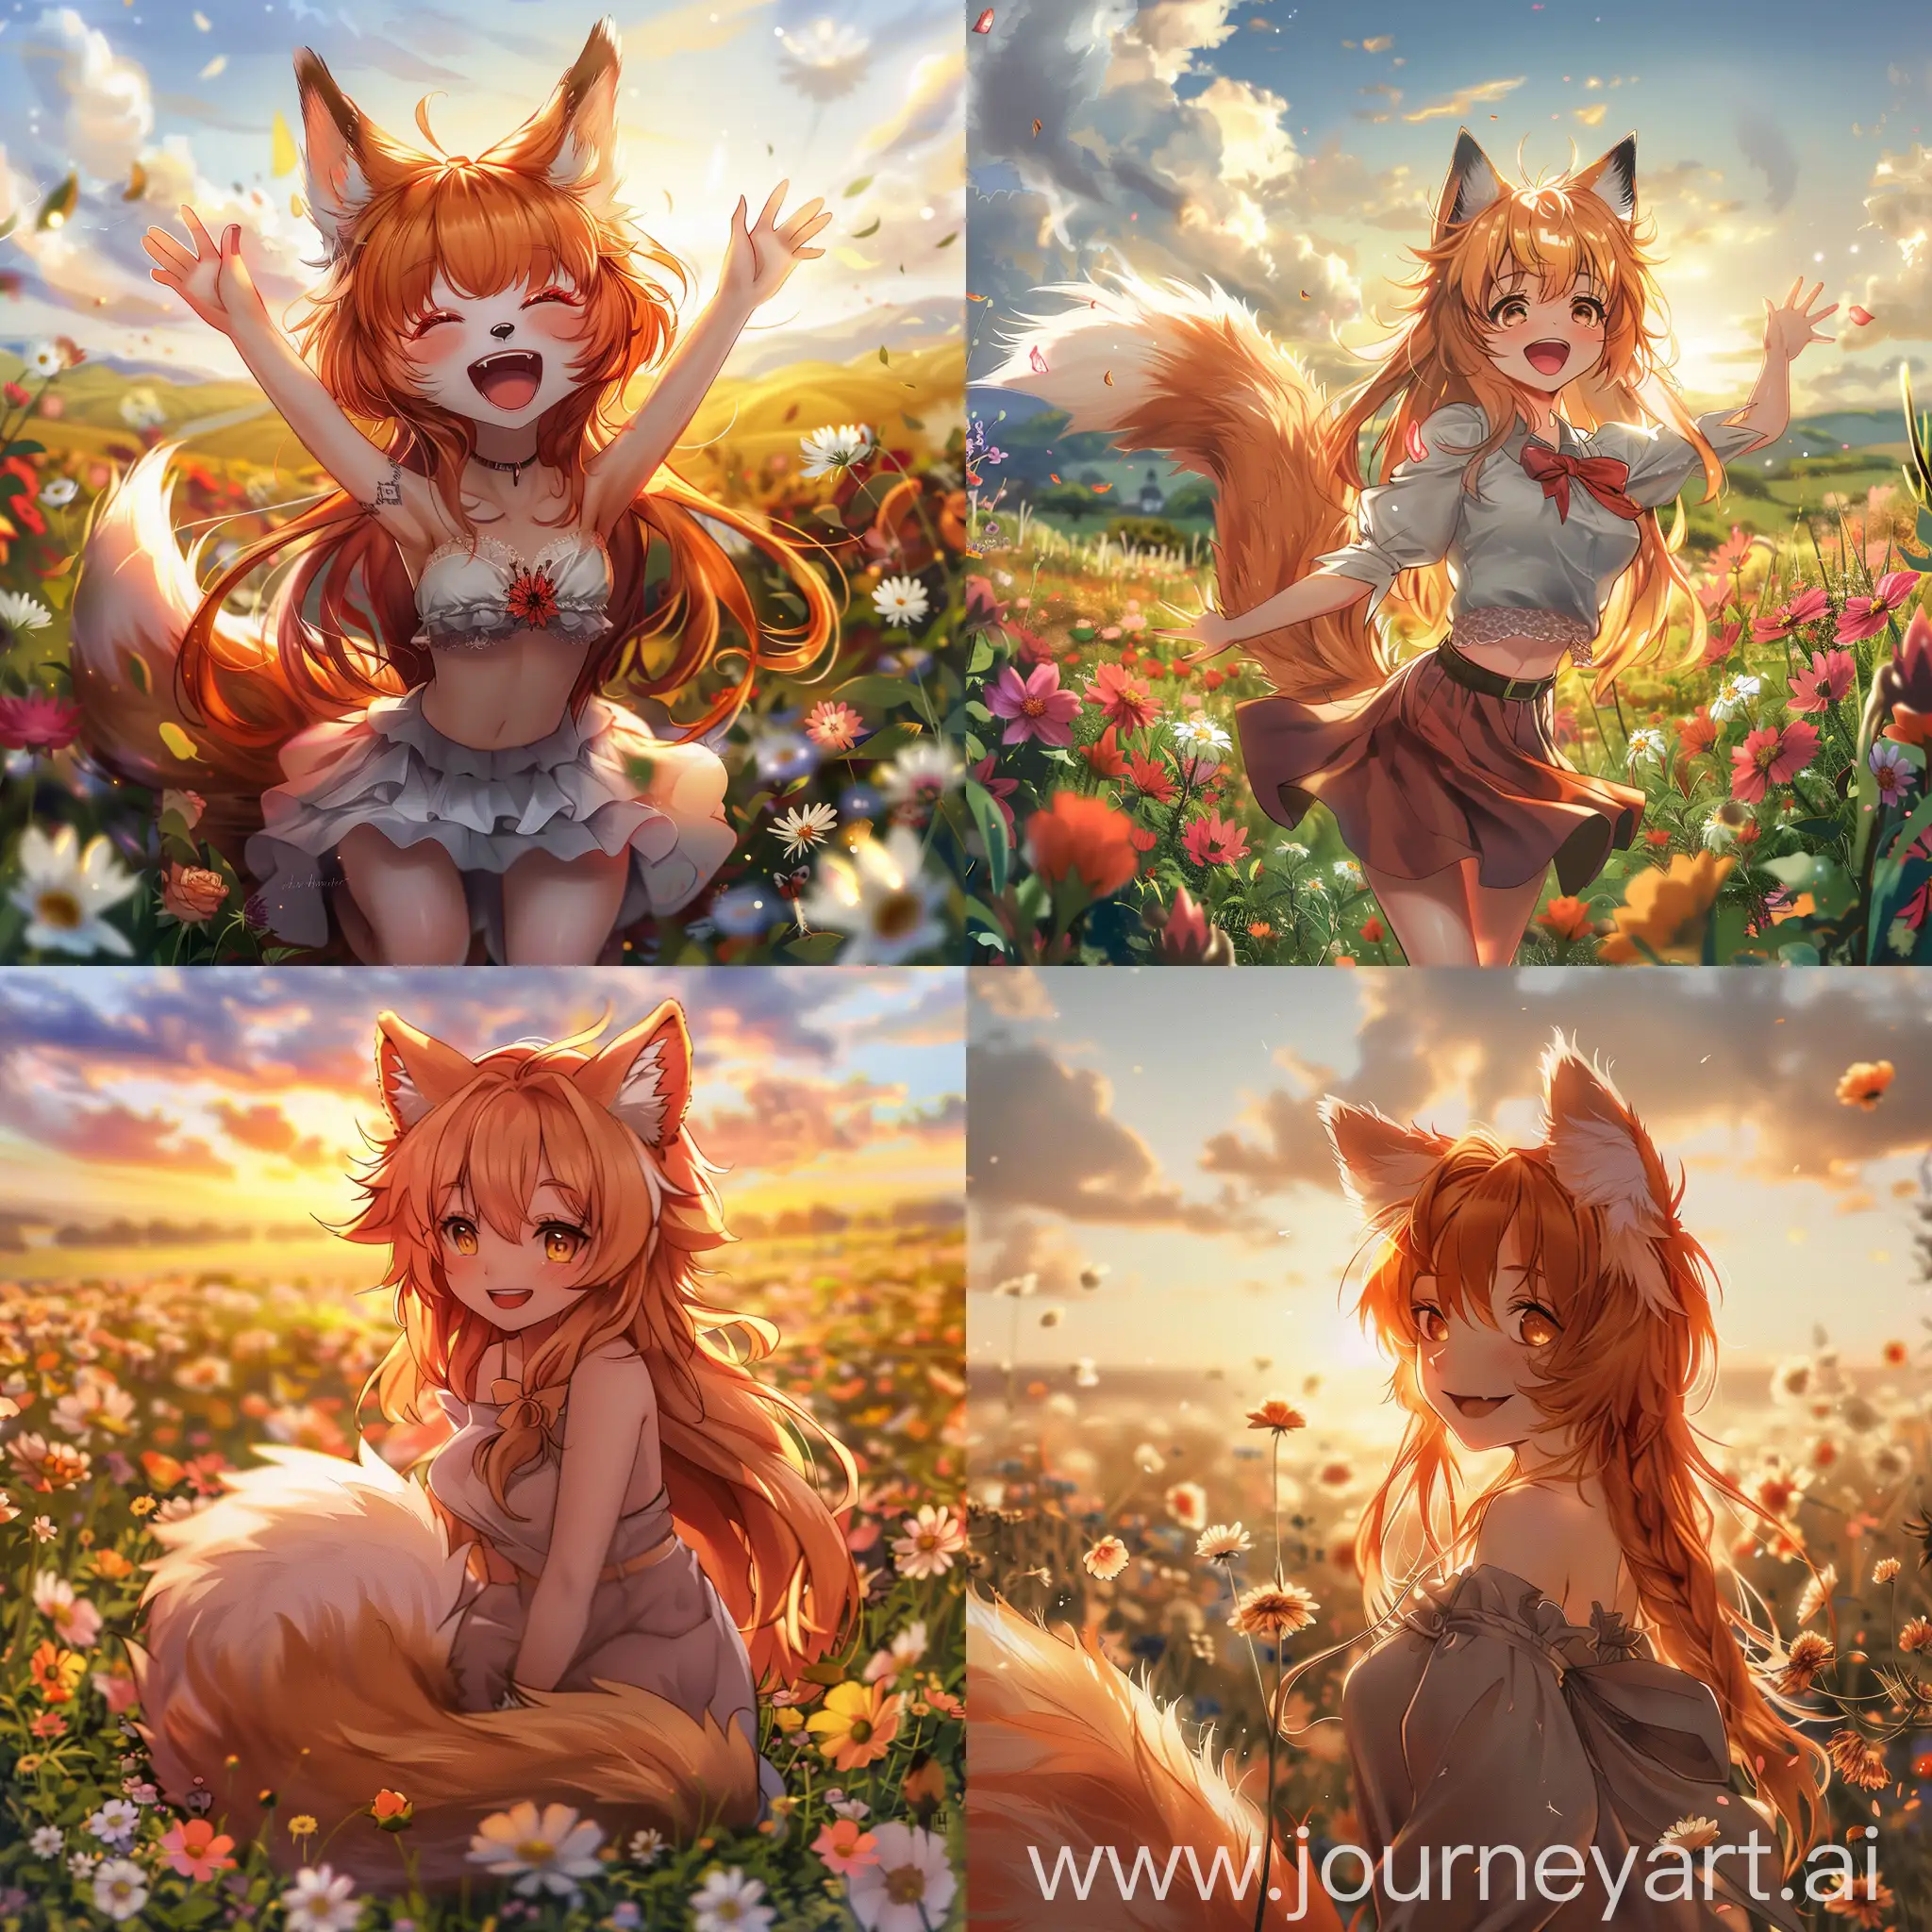 fox girl, fluffy fox tail, fluffy hair, cute face, happy, flower field, morning, anime style